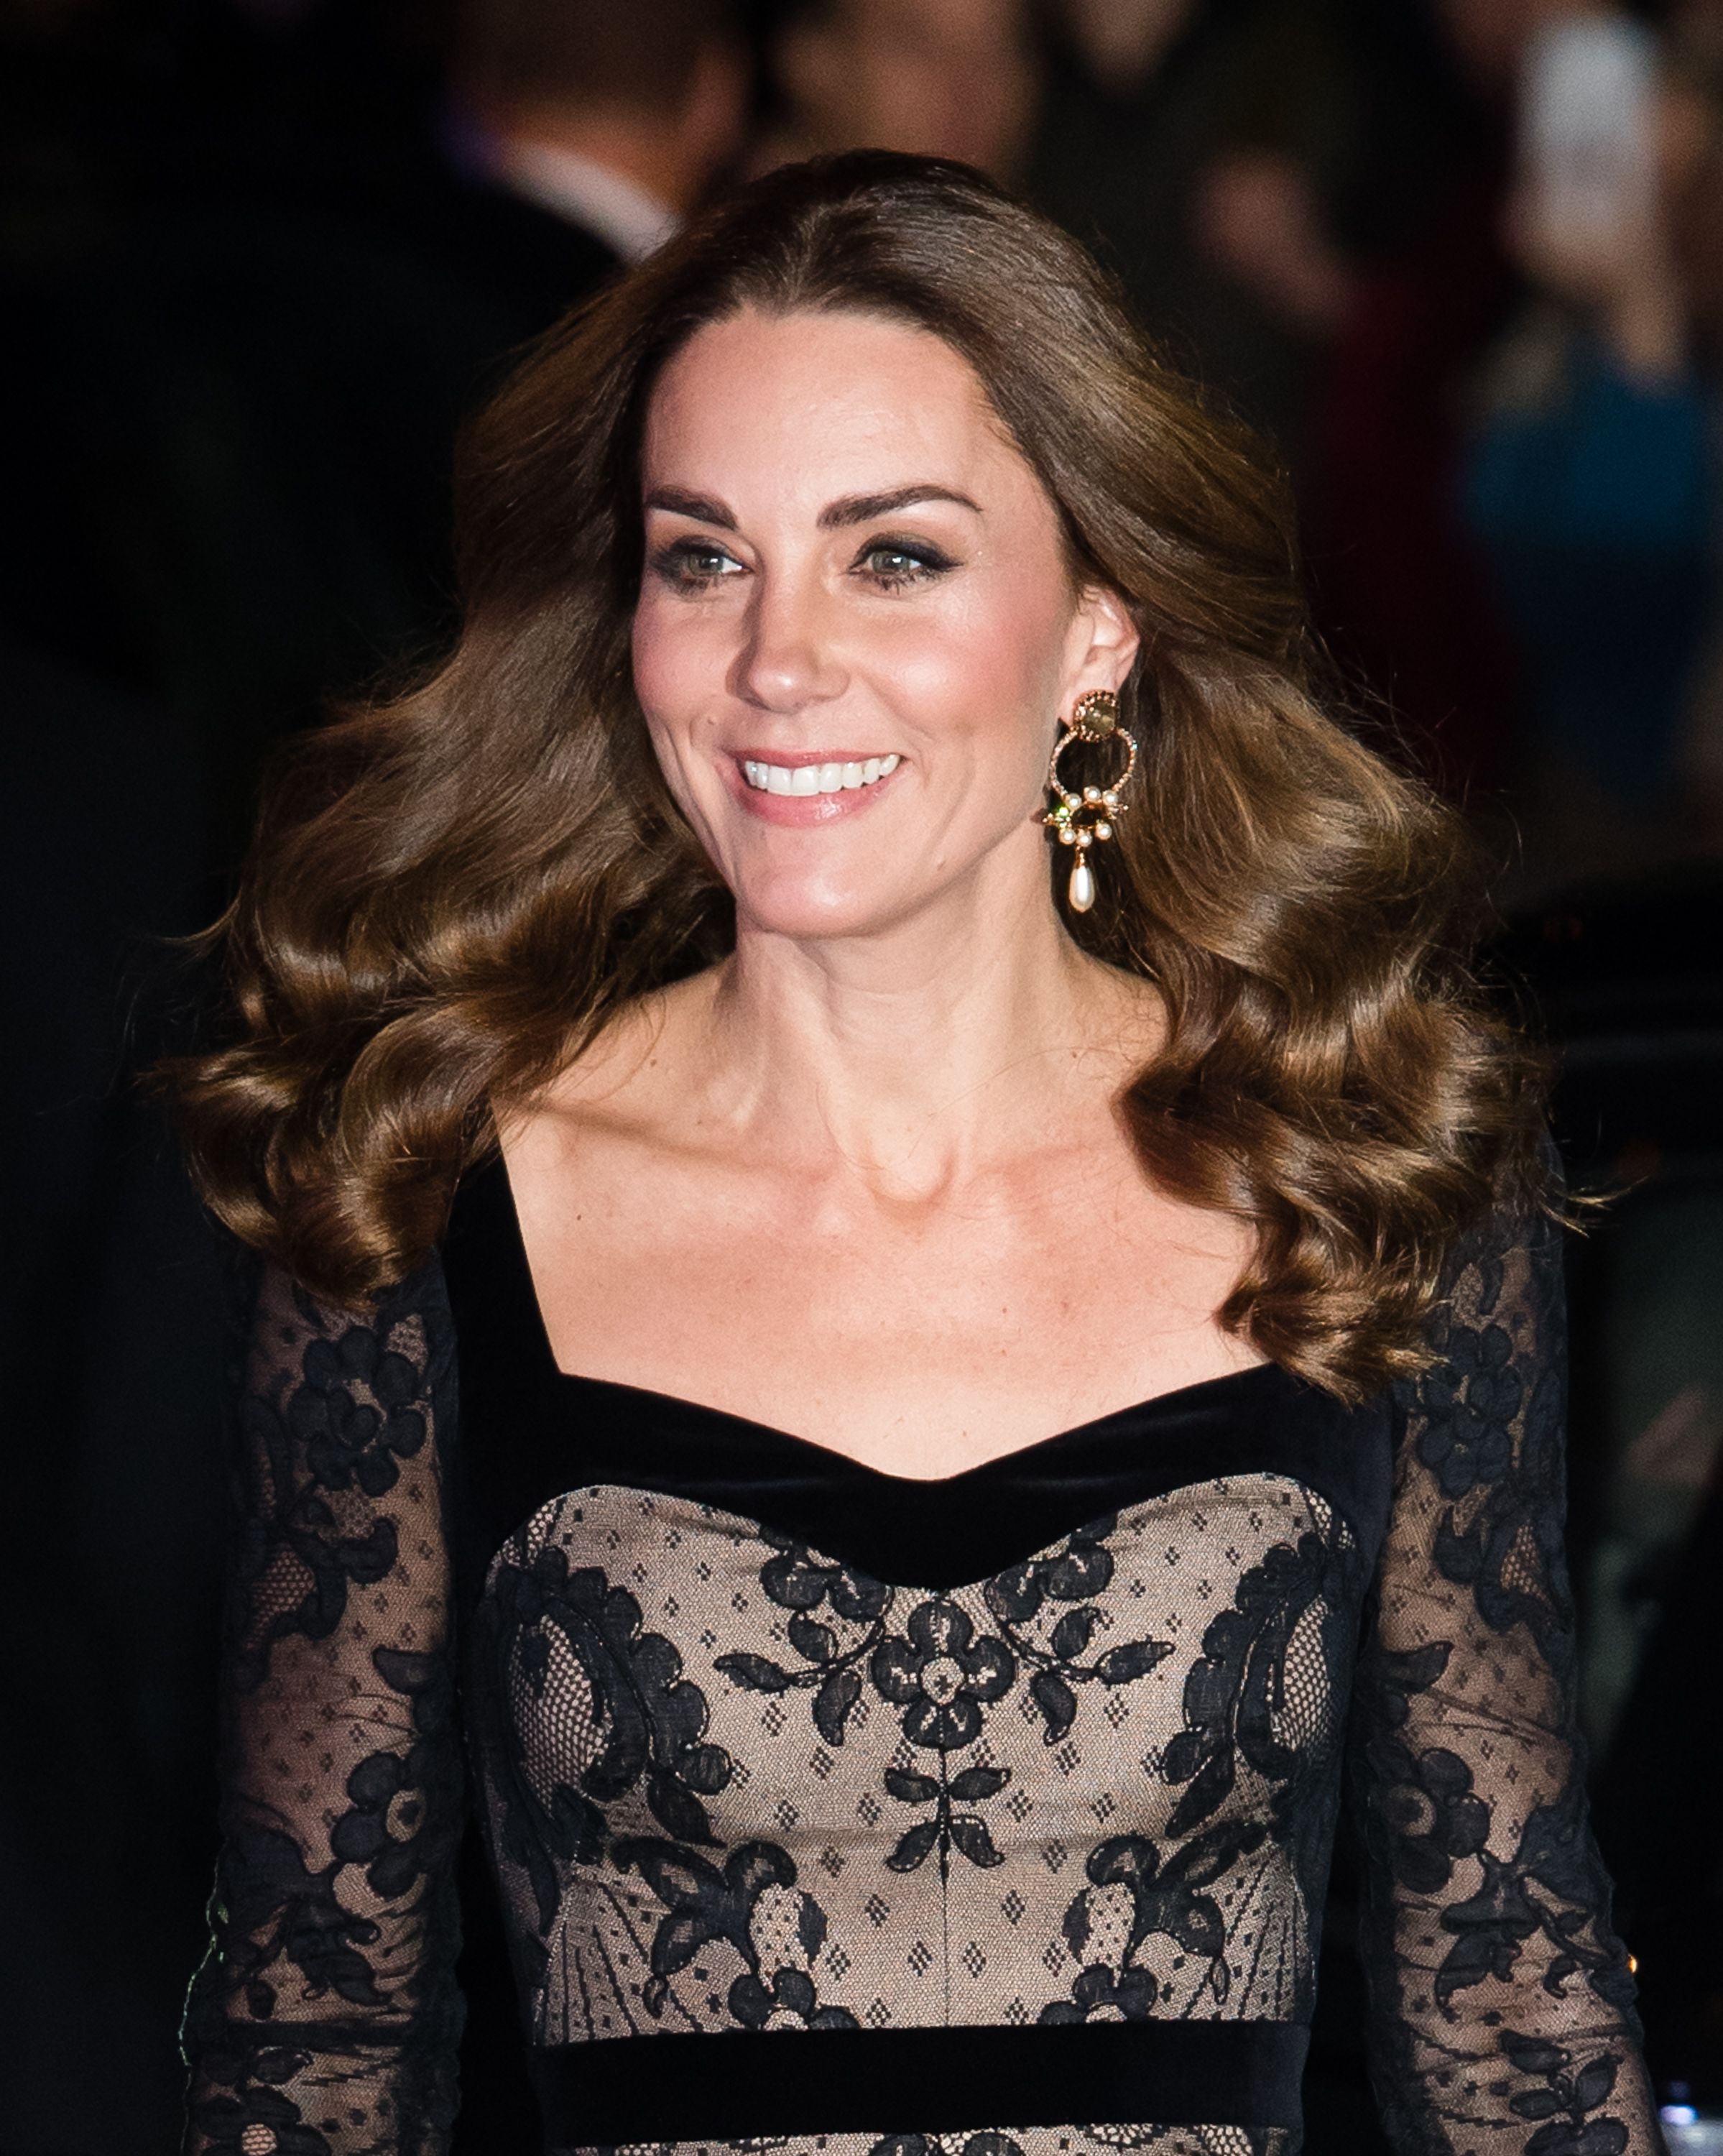 Kate Middleton's Black Lace Dress At Royal Variety Performance